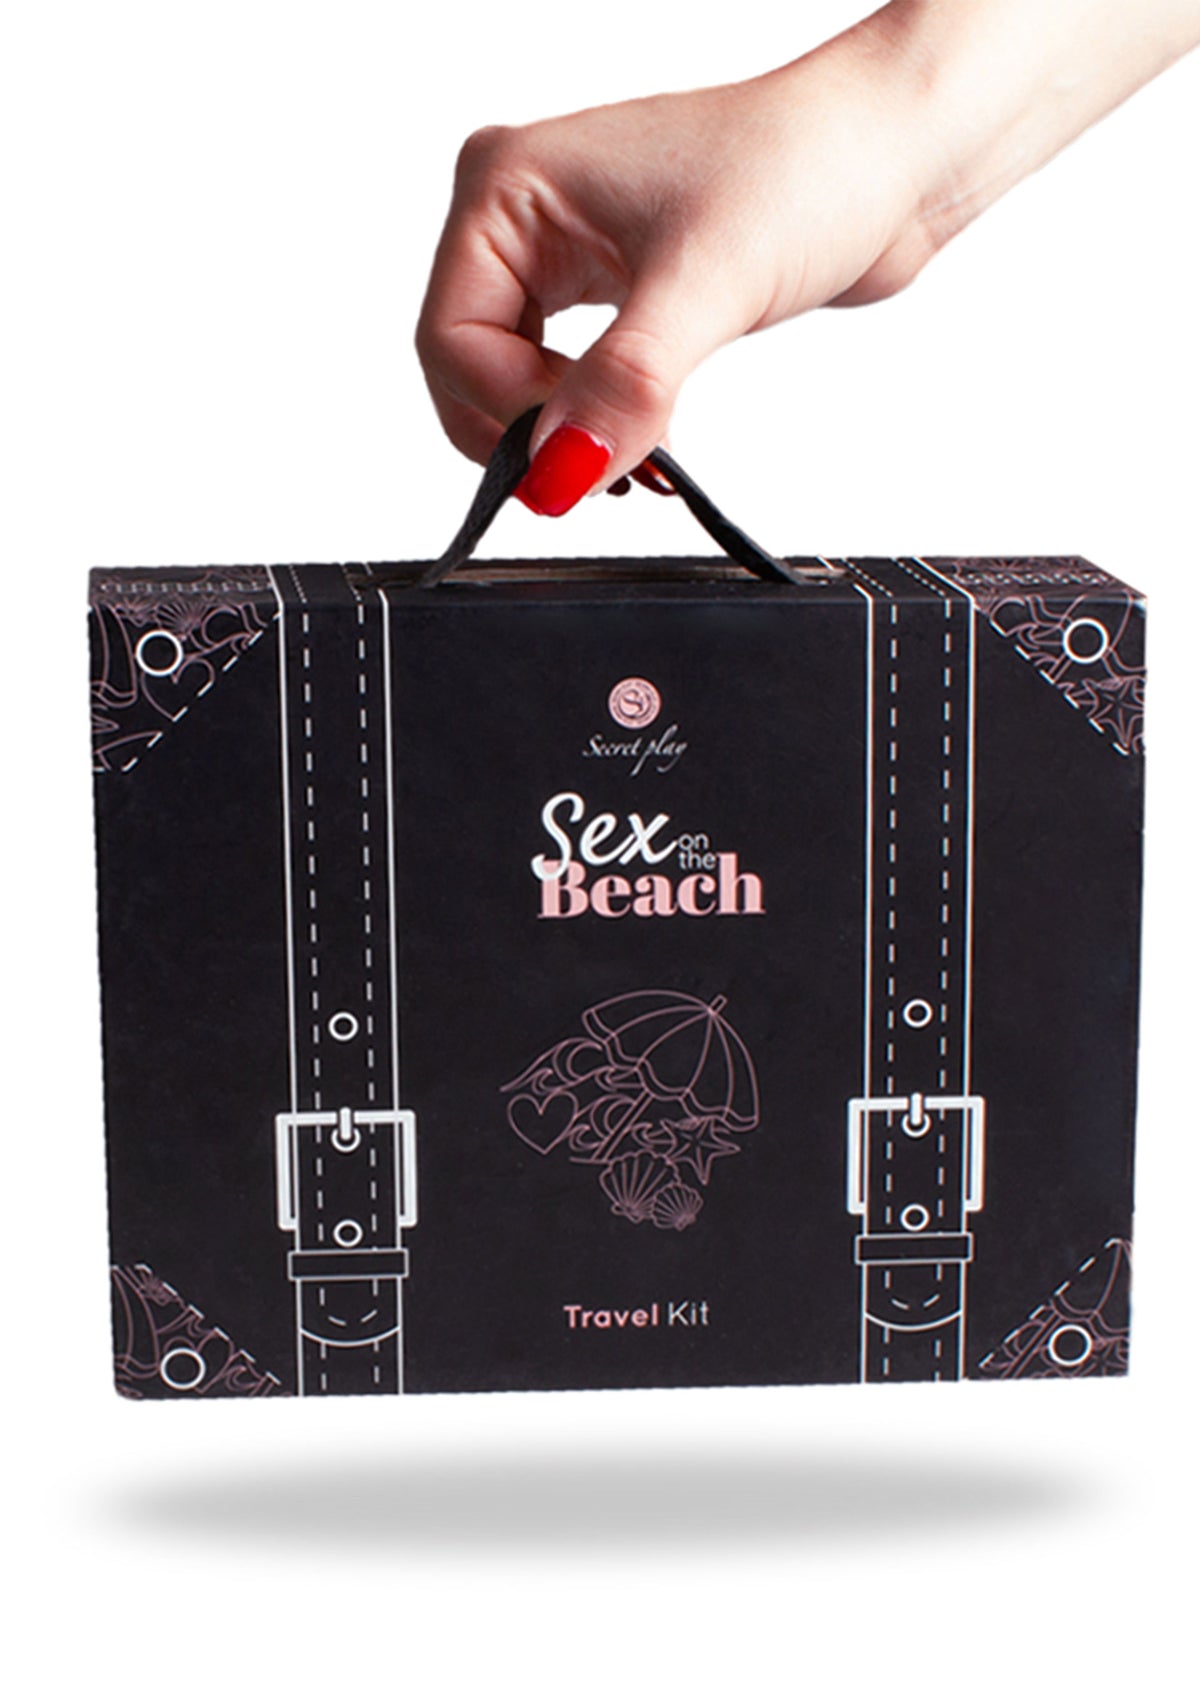 Sex On The Beach Travel Kit